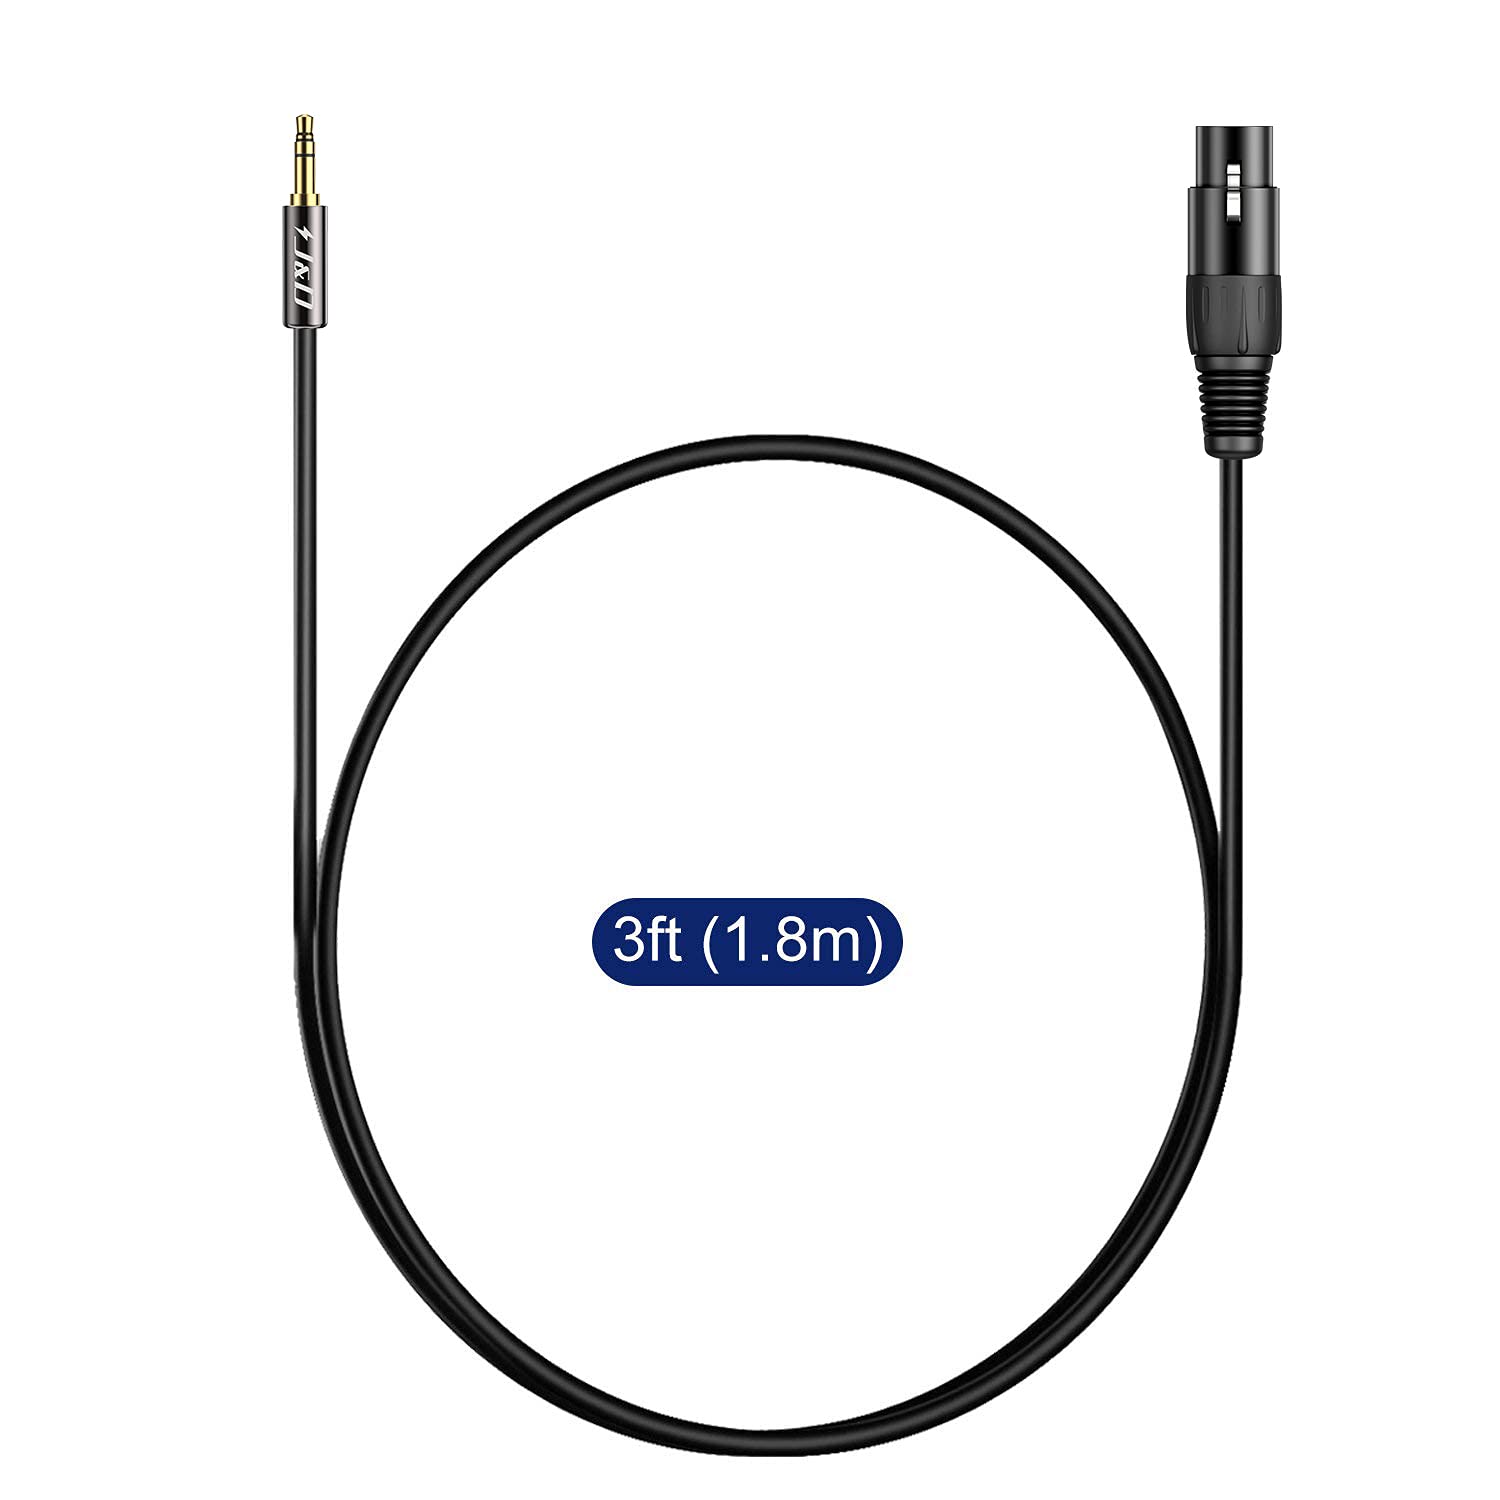 3.5mm to Mini XLR Cable, Balanced 1/8 inch Mini Jack TRS Stereo